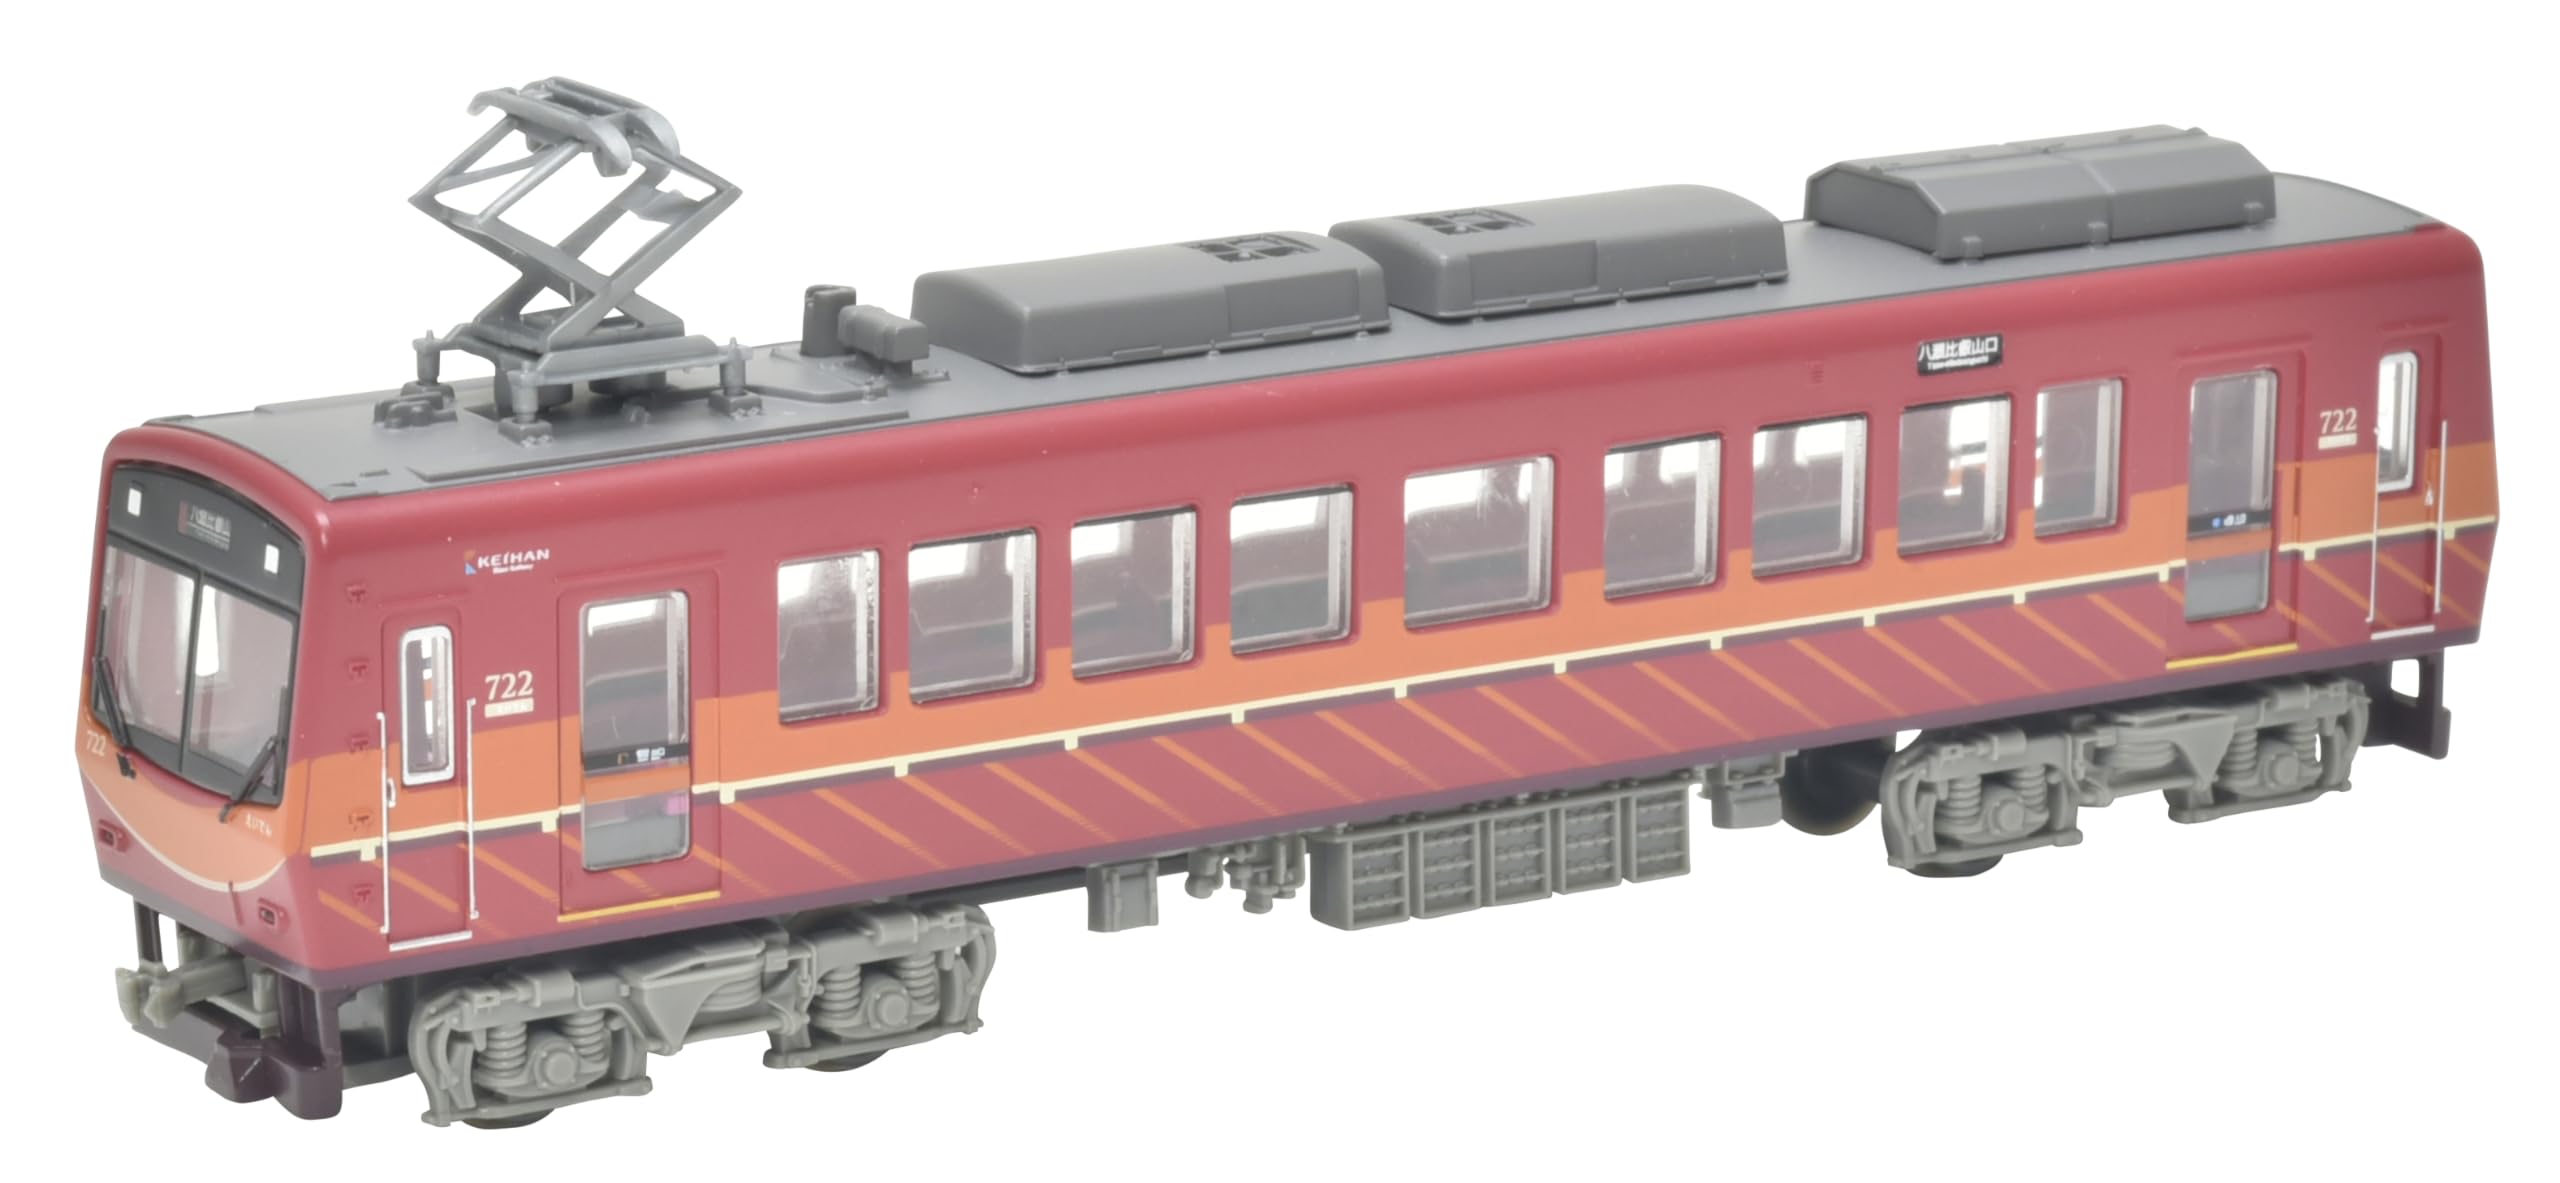 Tomytec 700 Series Eizan Train Red Railway Collection Diorama Supplies